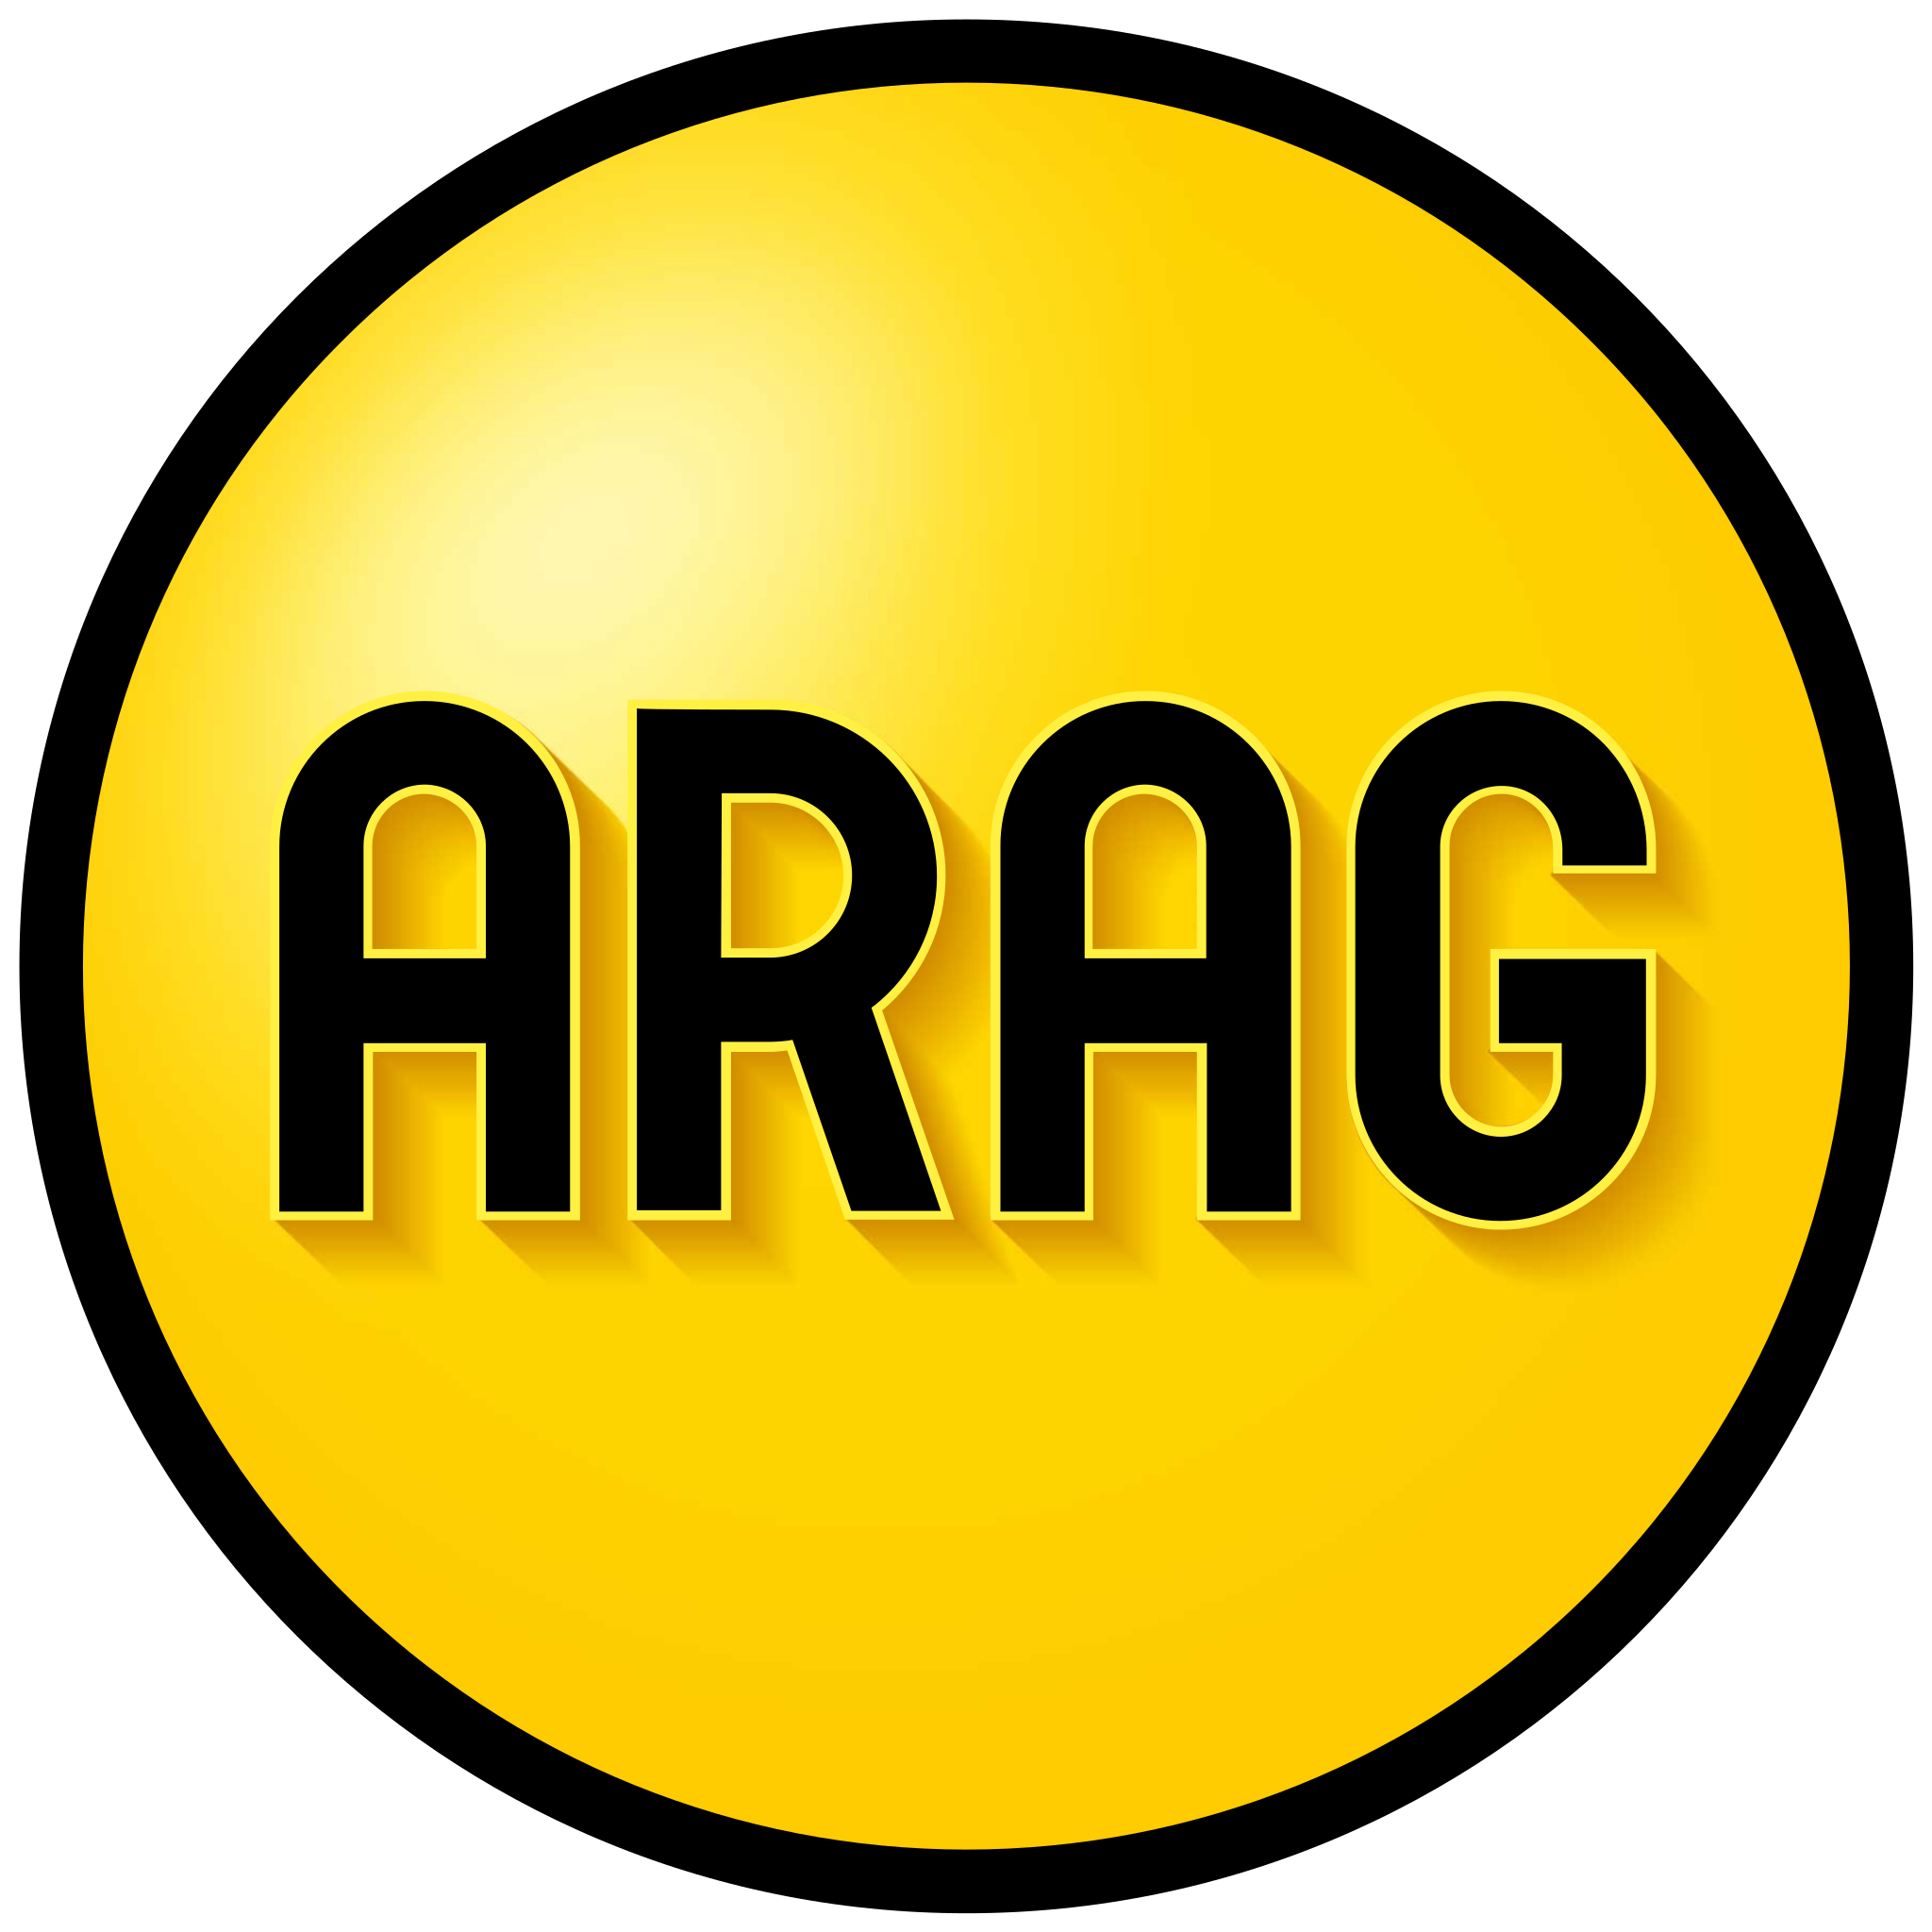 logo ARAG